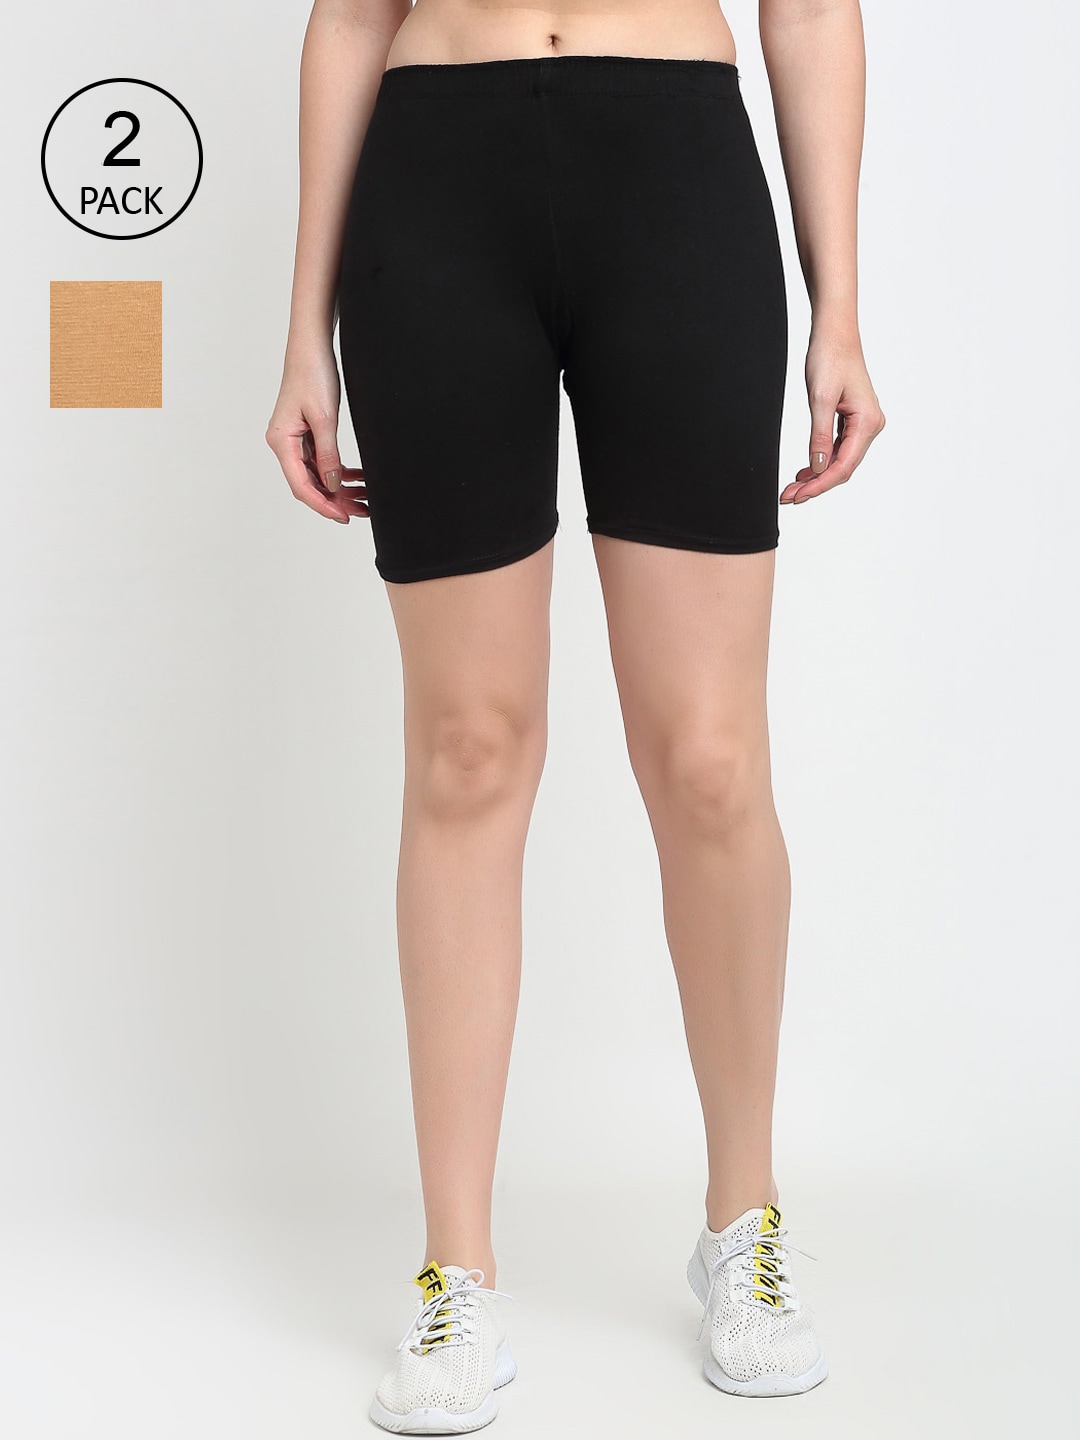 GRACIT Women Black & Beige Set Of 2 Biker Shorts Price in India